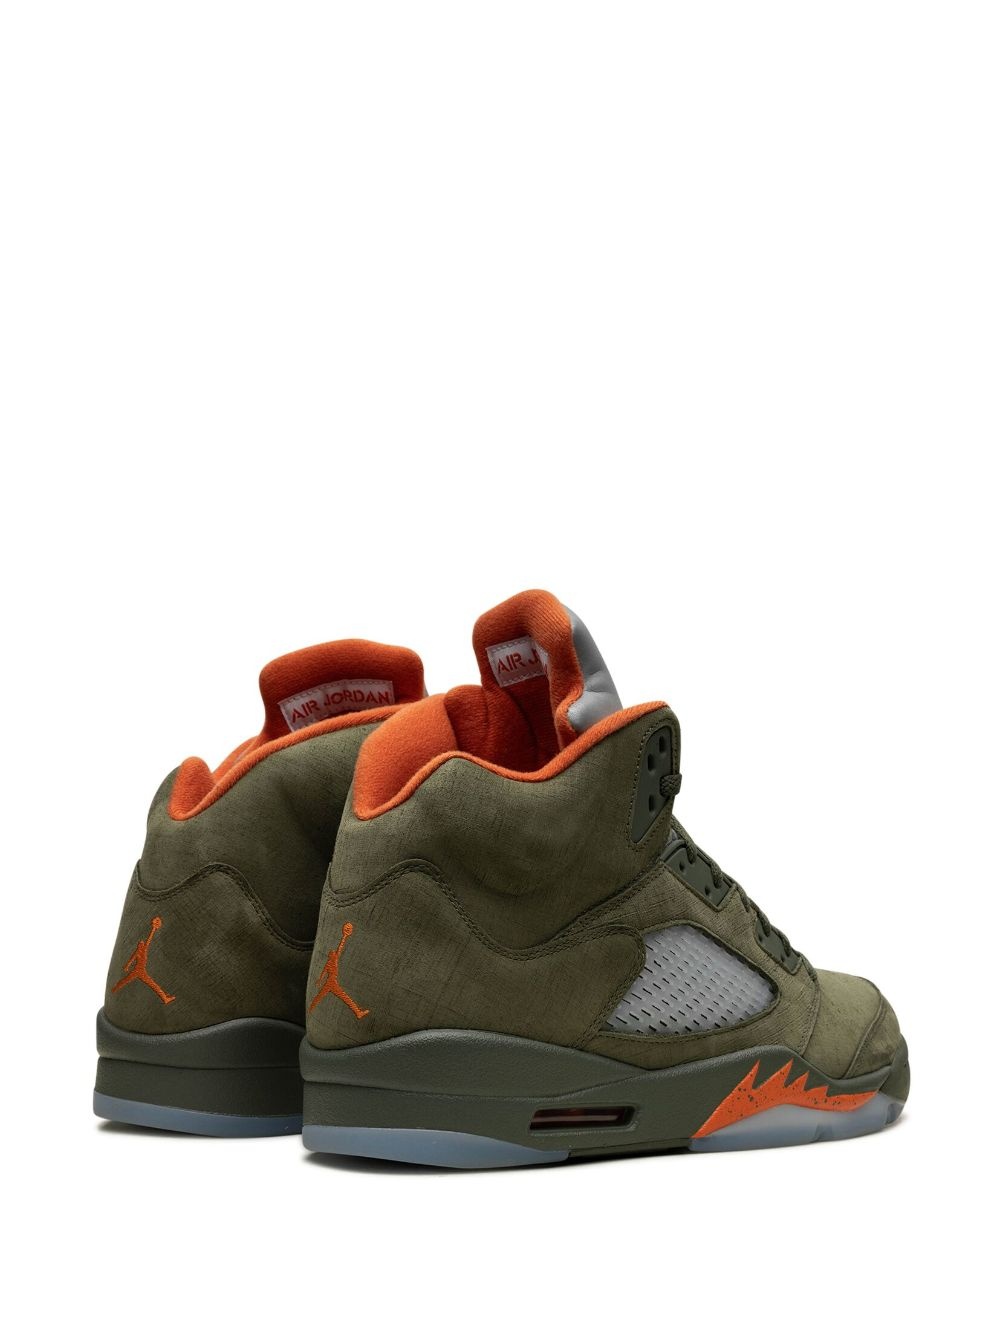 Air Jordan 5 OG "Olive" sneakers - 3